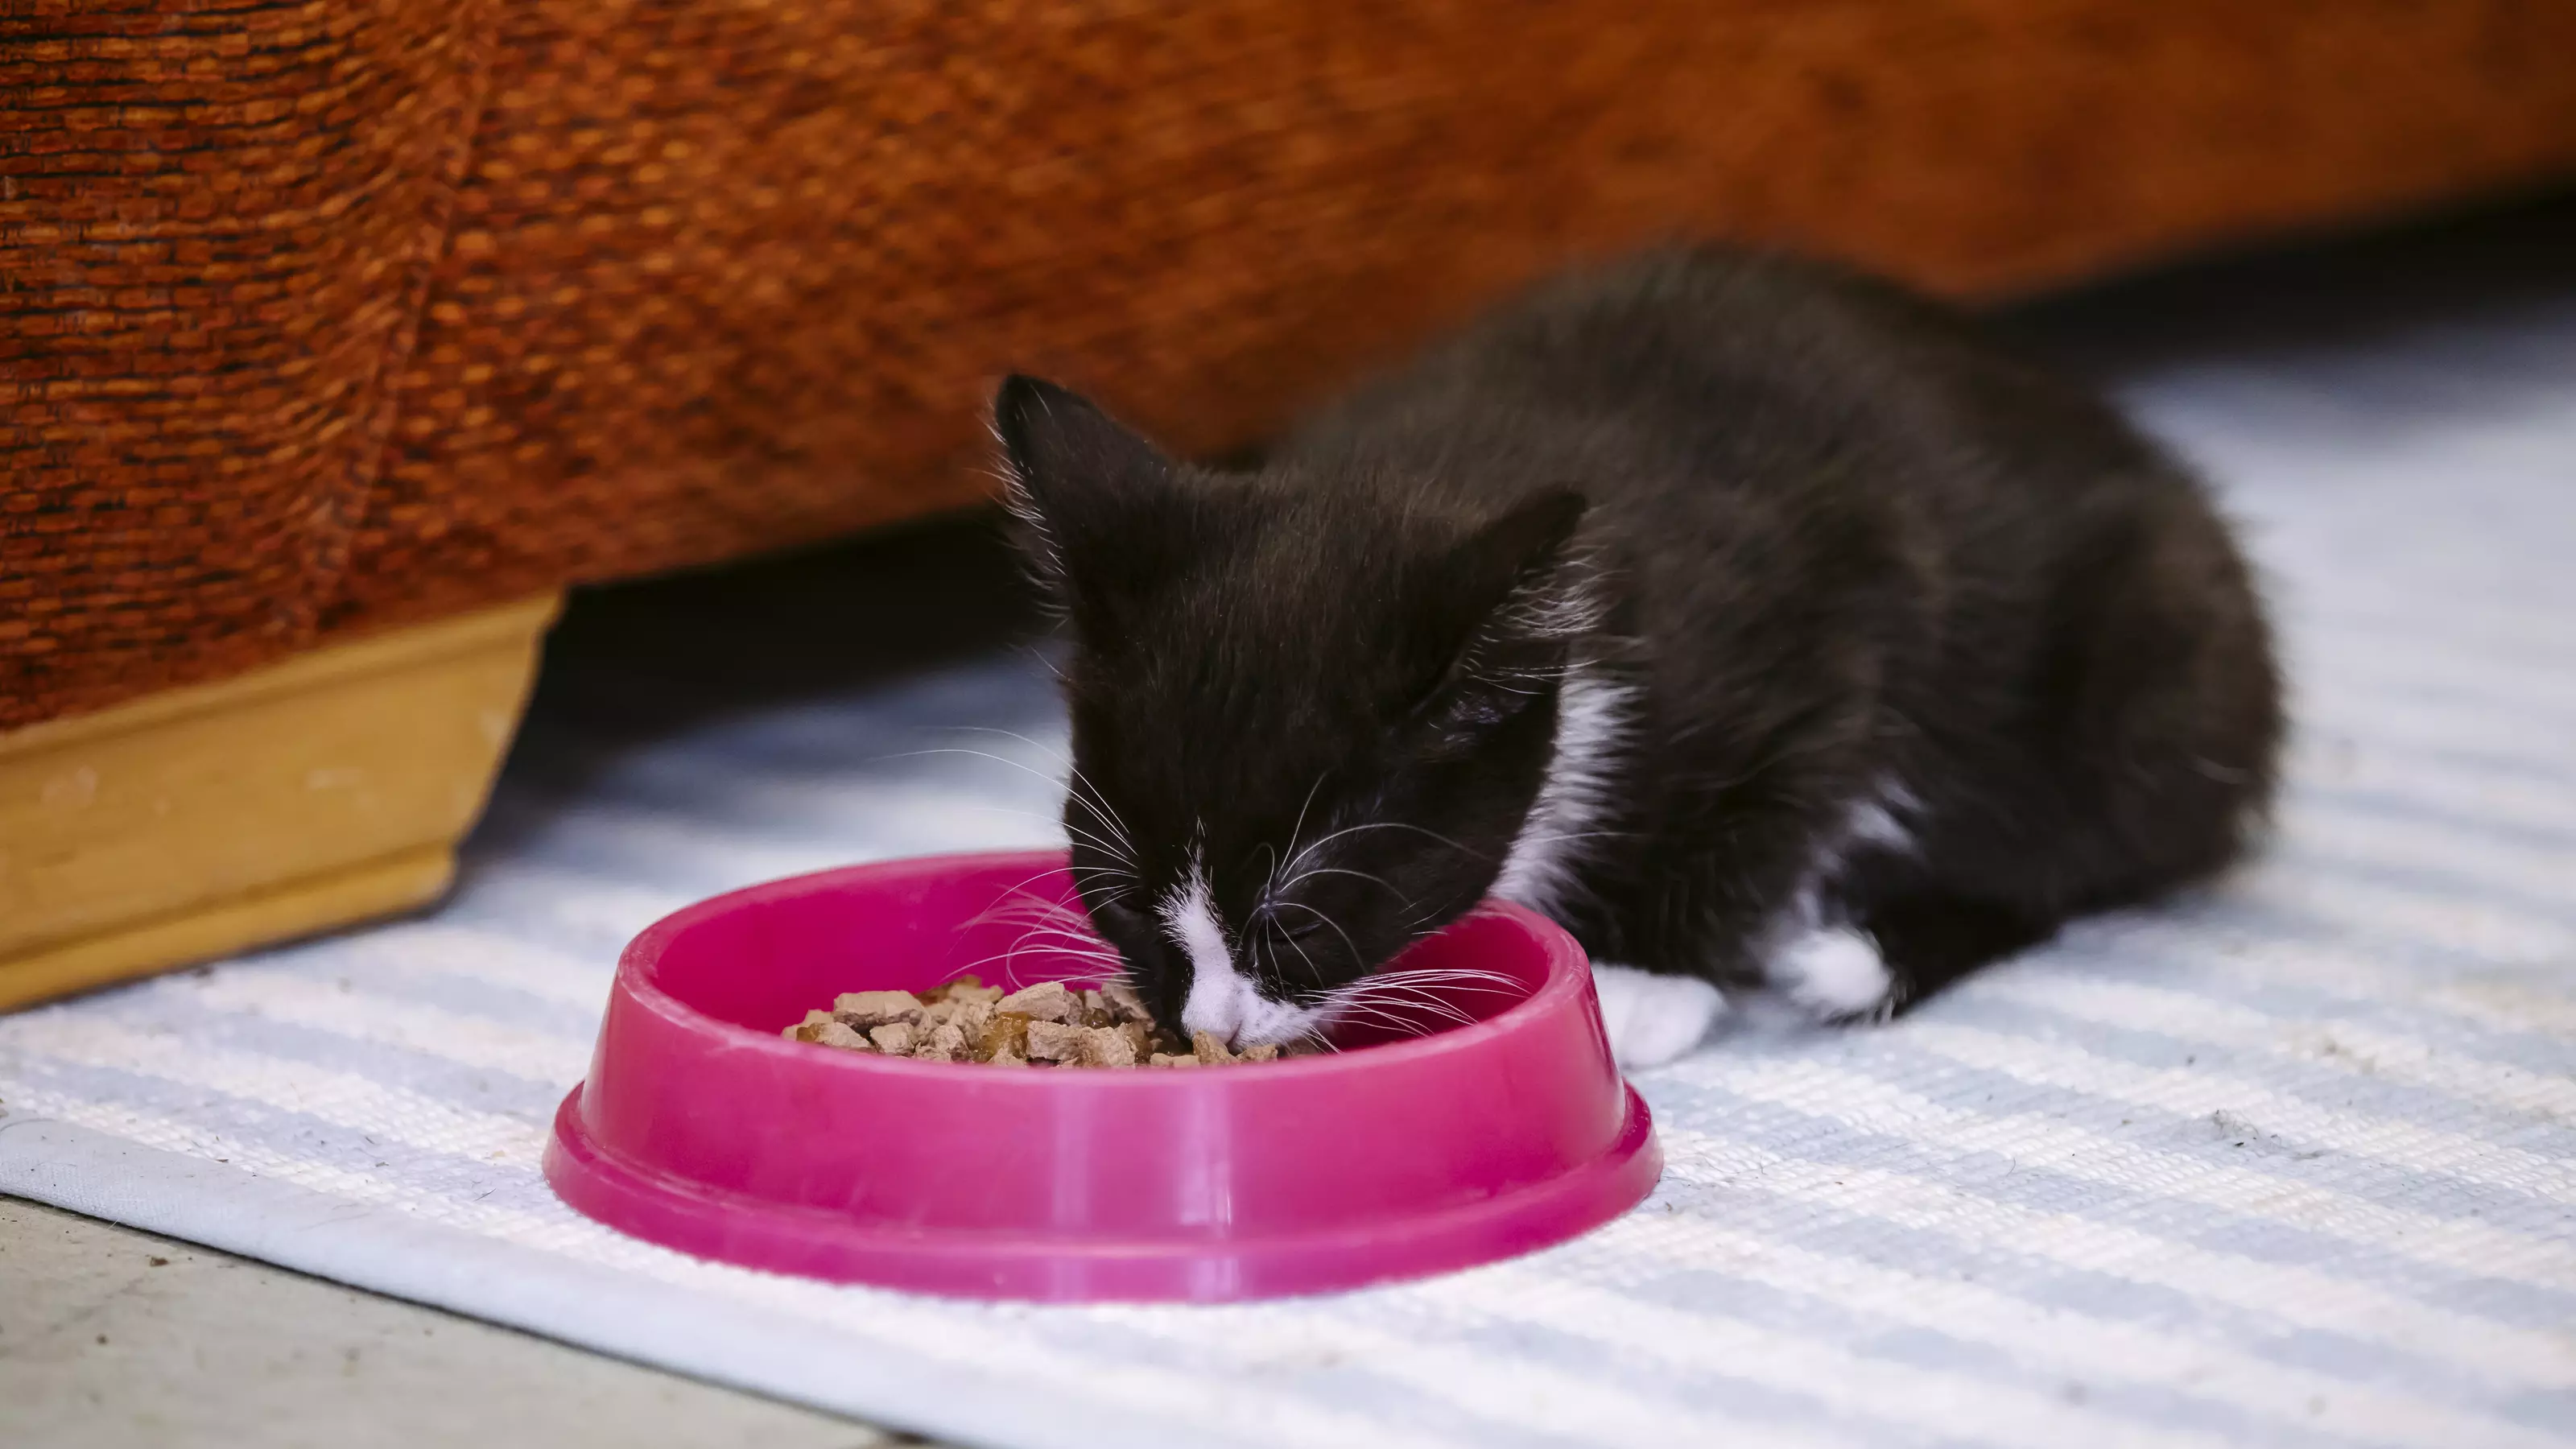 Black kitten eating out of pink bowl